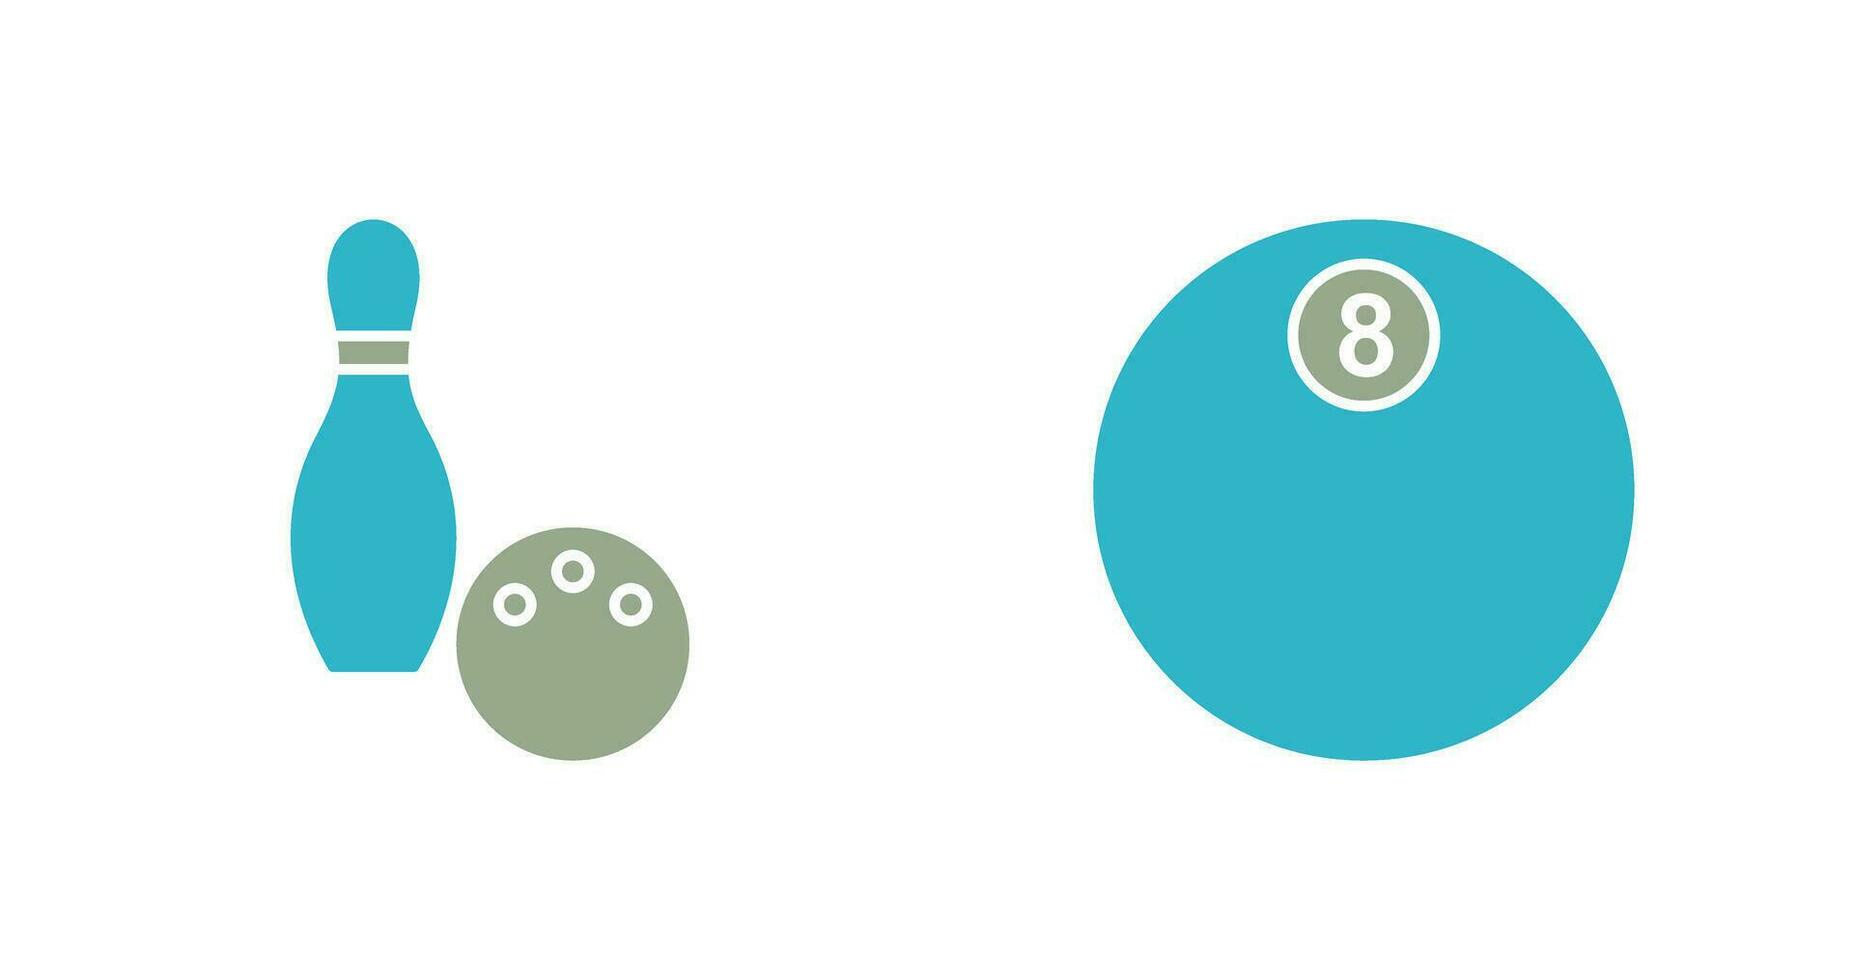 Bowling und acht Ball Symbol vektor